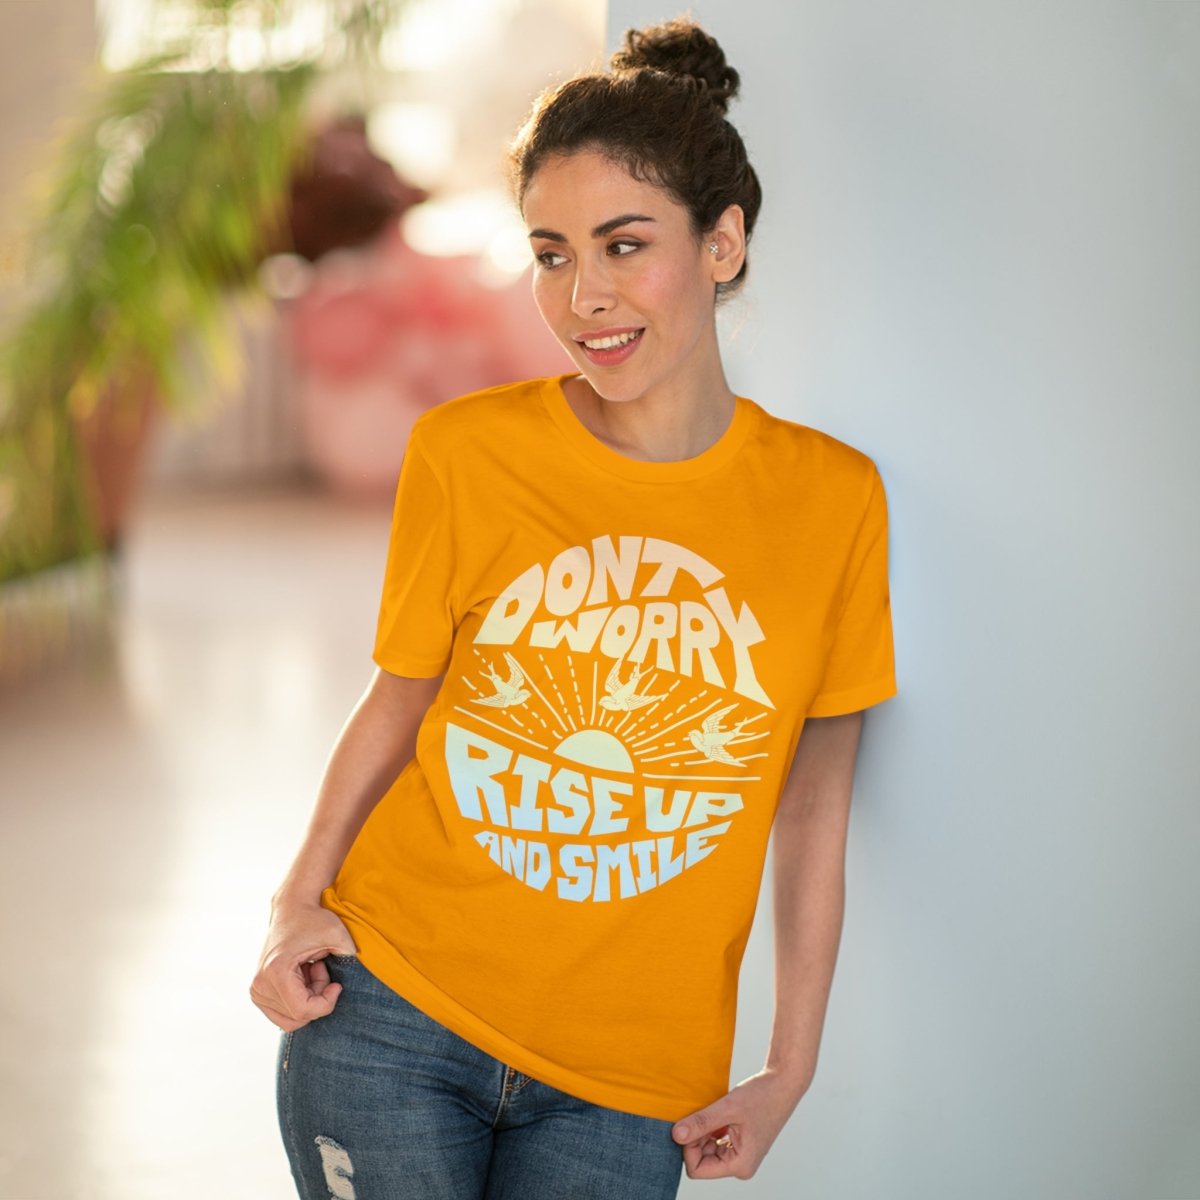 Don't Worry Premium Organic Cotton T-Shirt, Happy Smile